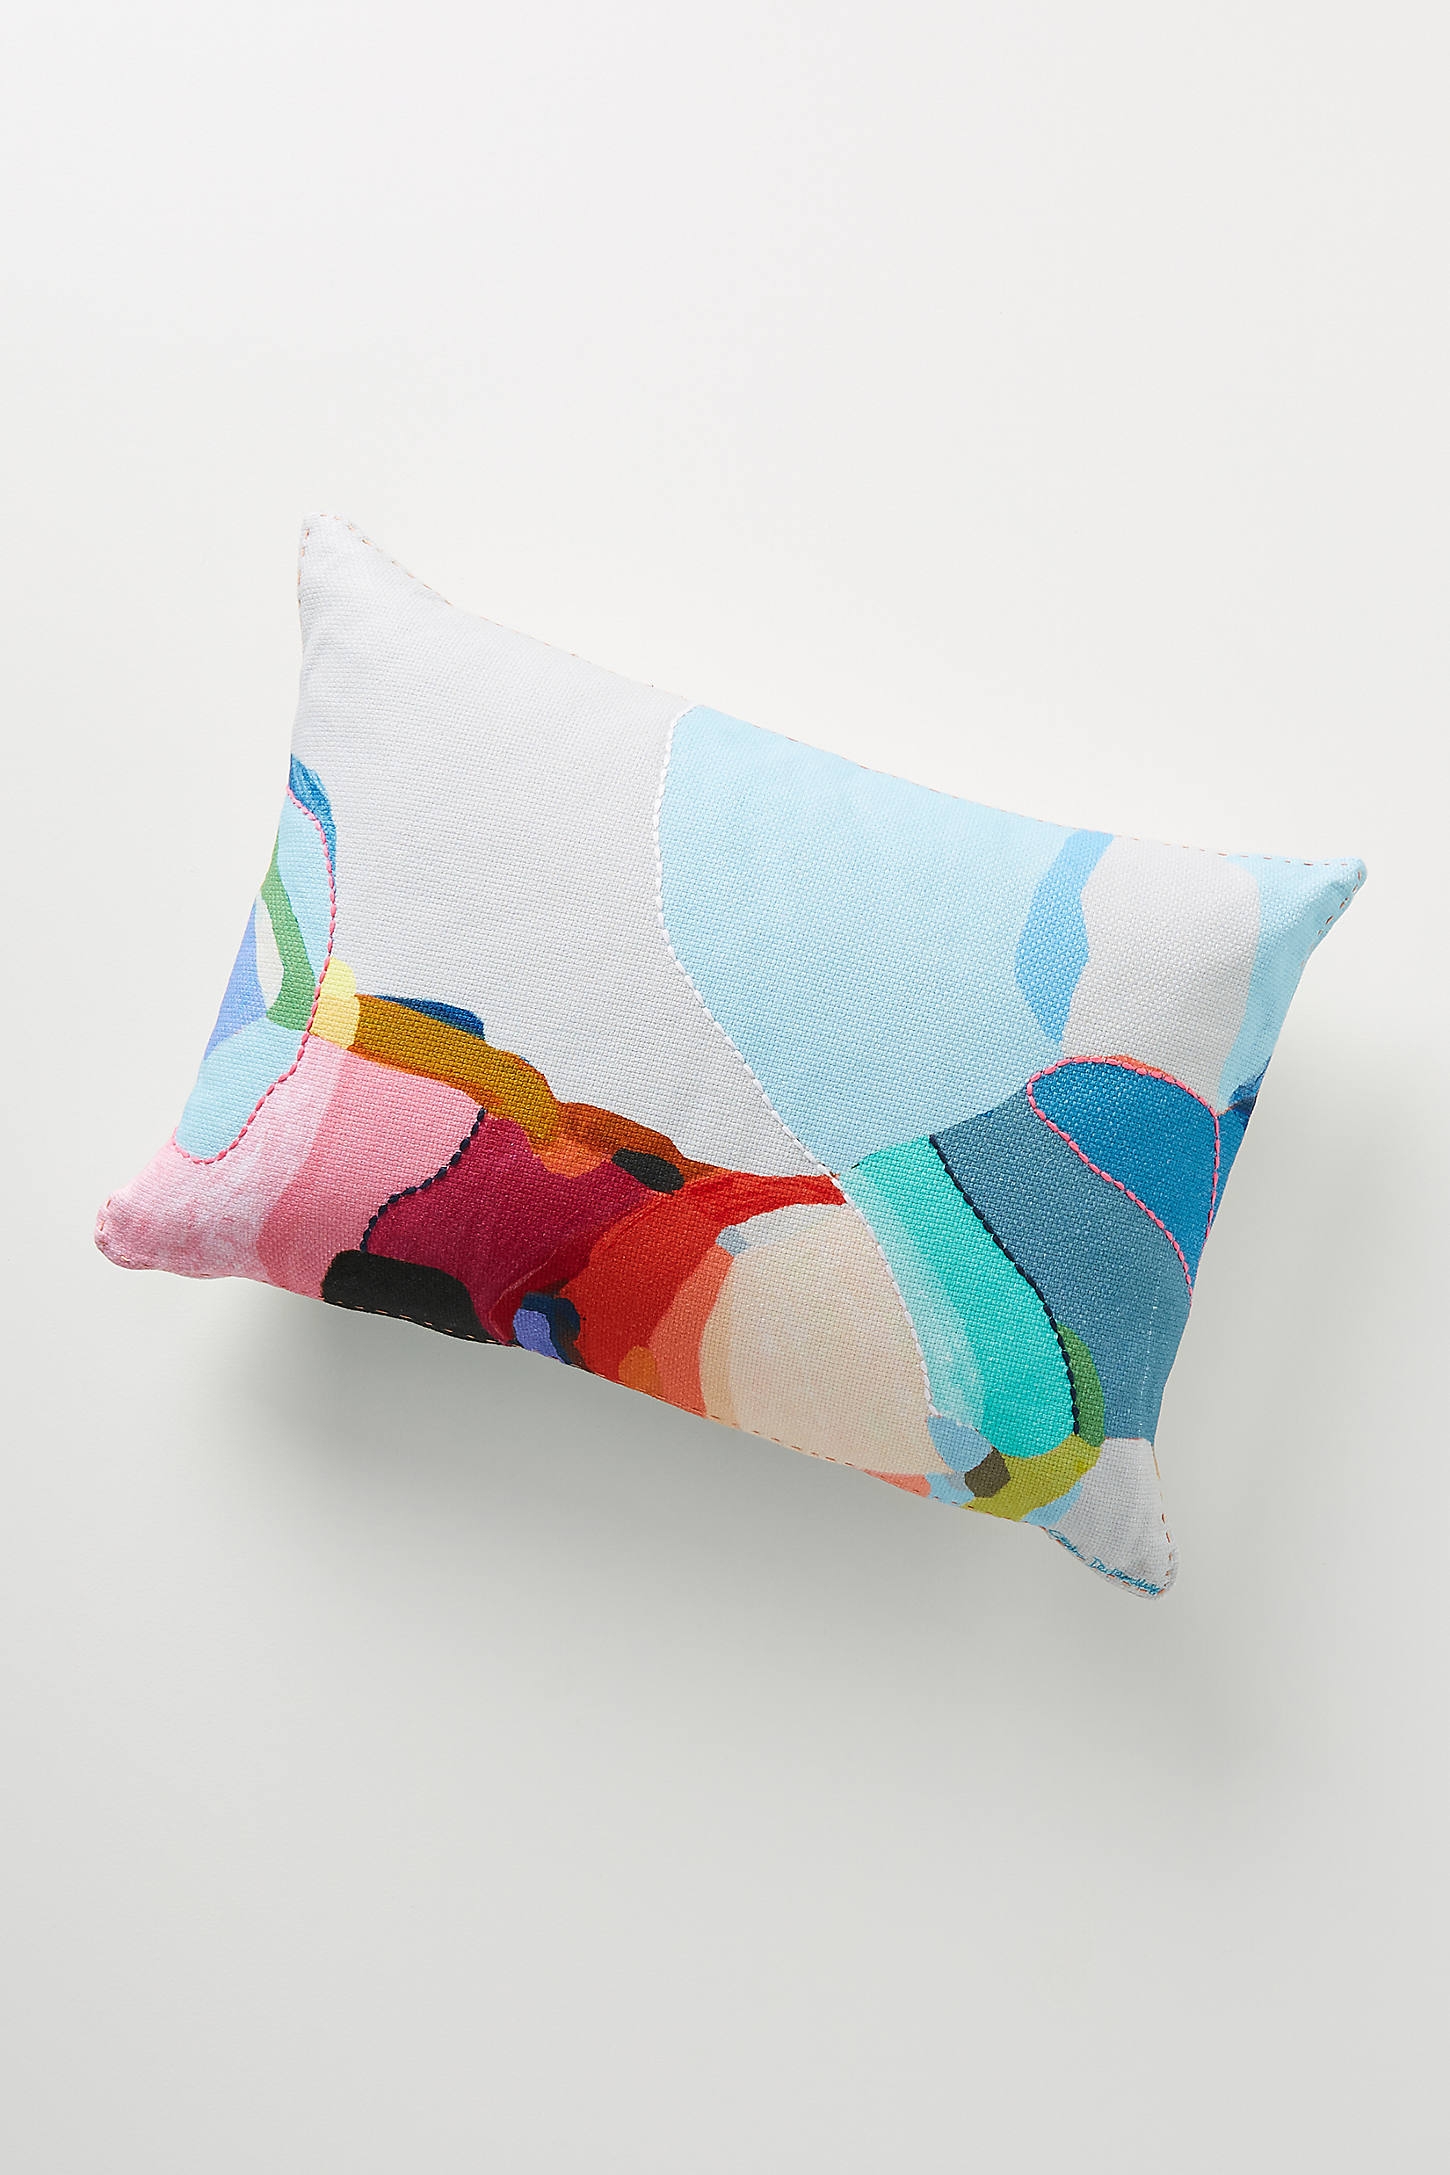 Claire Desjardins Kaleidoscope Pillow - Image 0